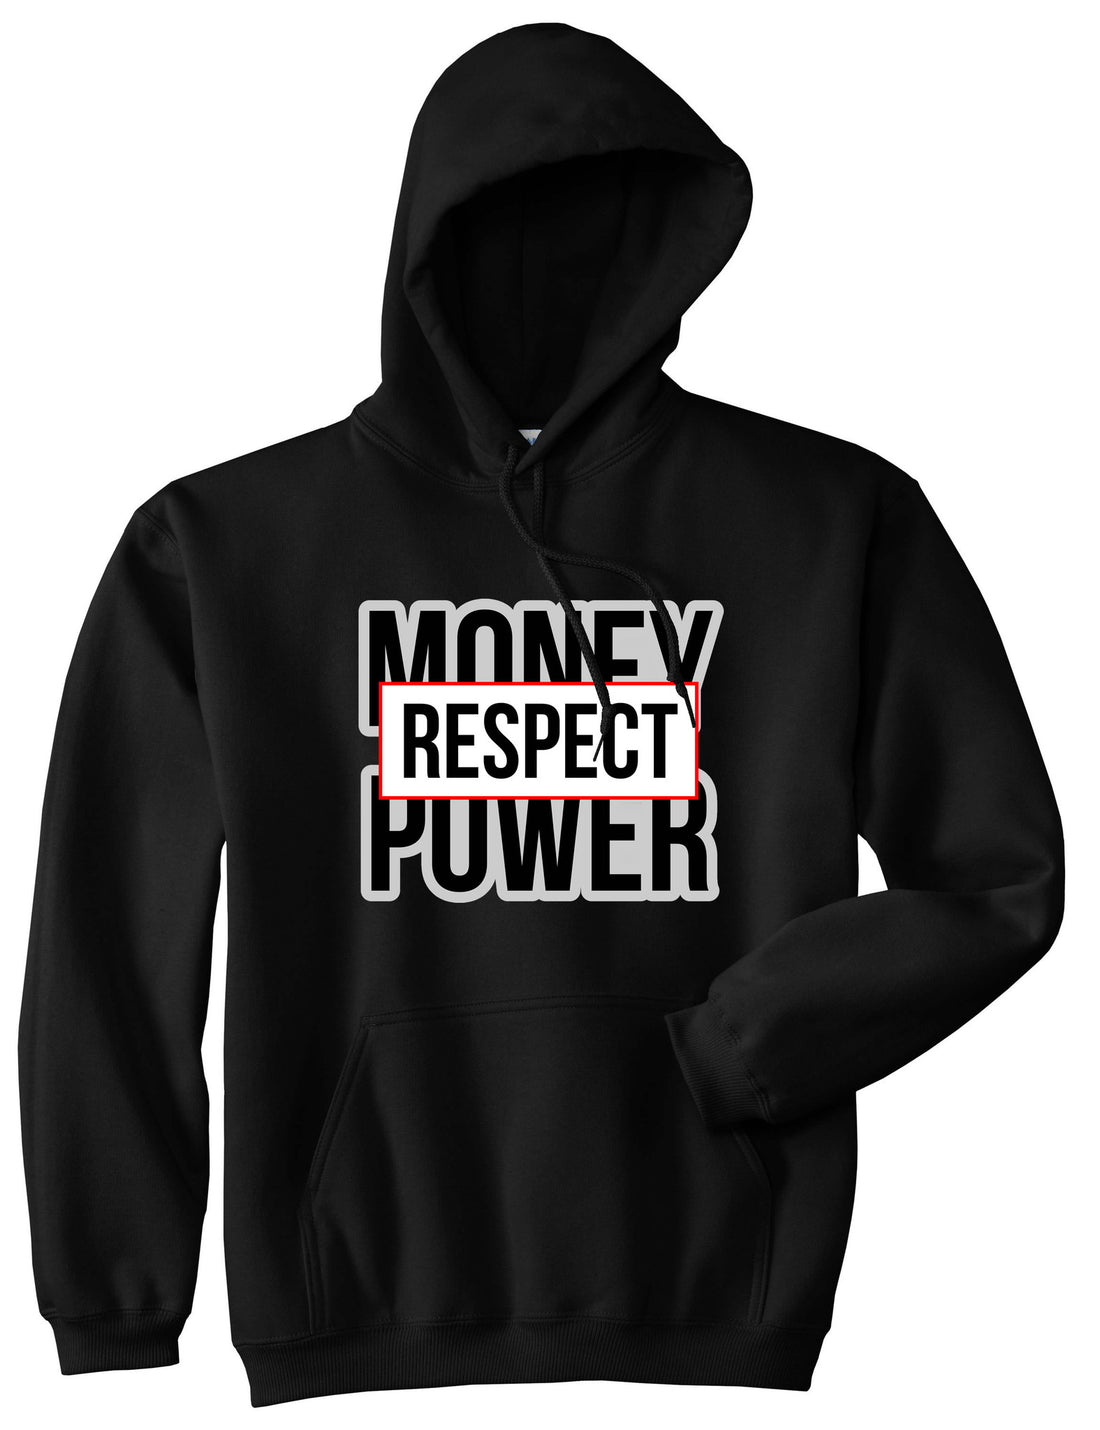 Money Power Respect Boys Kids Pullover Hoodie Hoody in Black By Kings Of NY